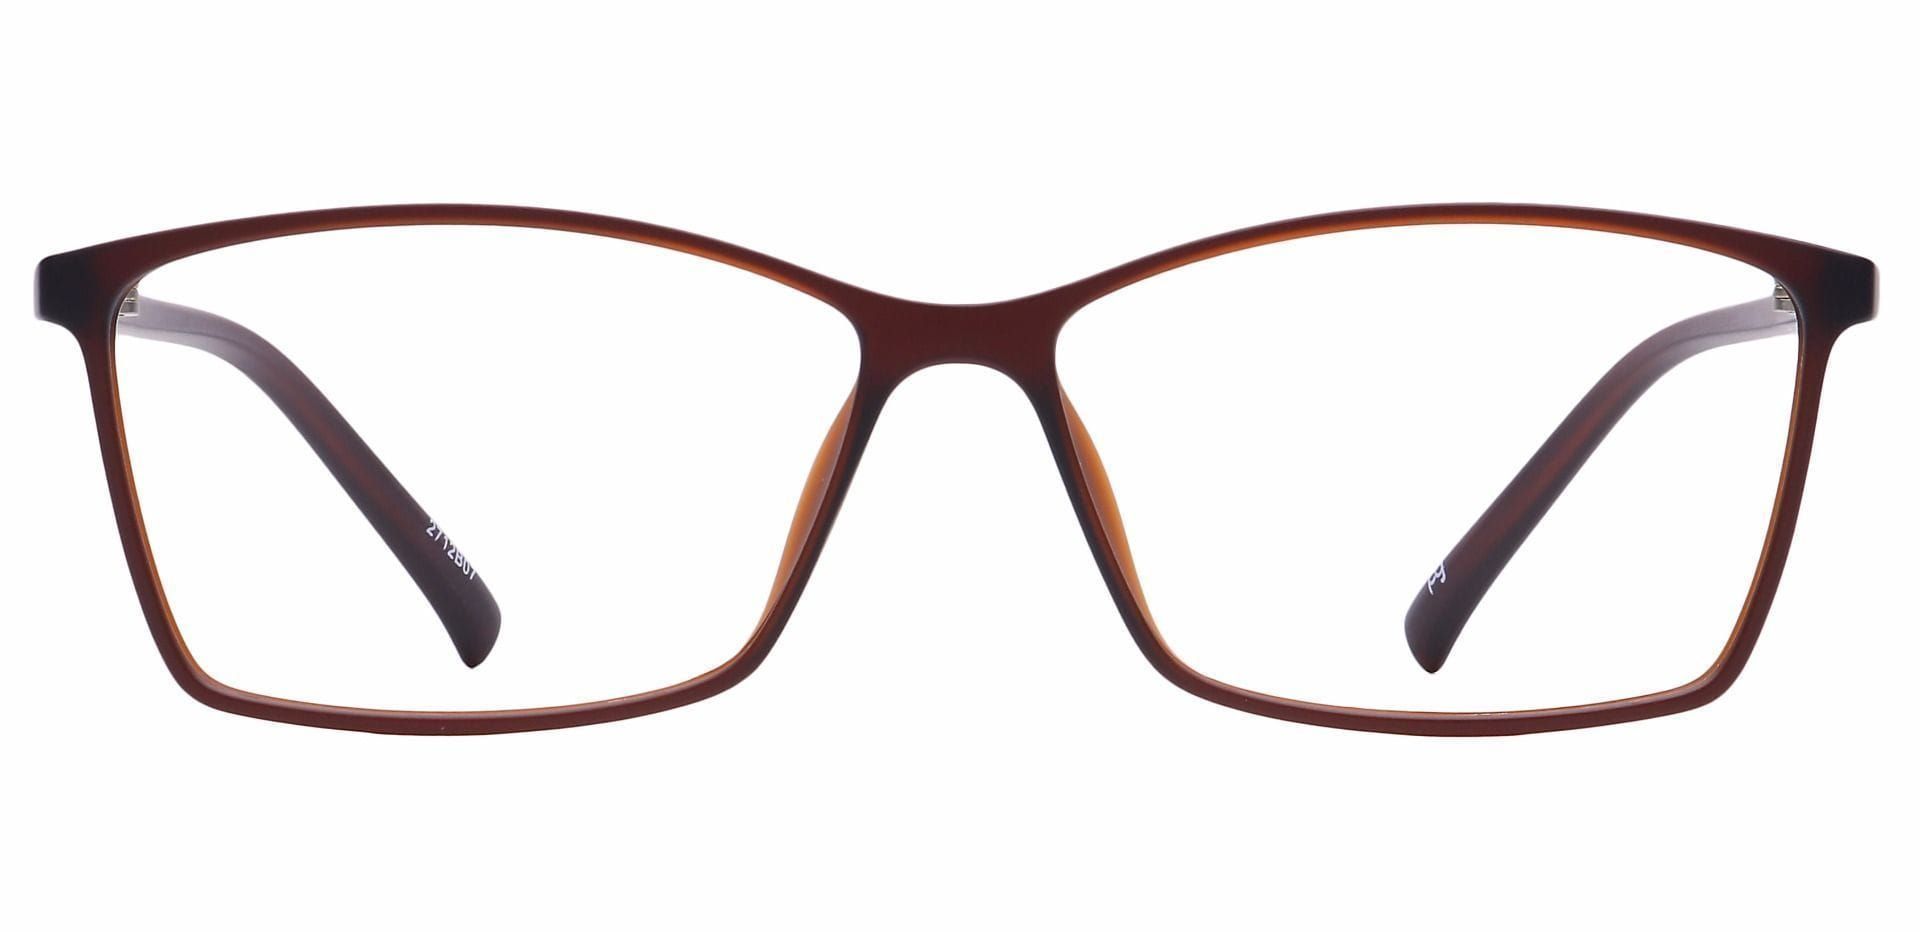 Align Rectangle Eyeglasses Frame -  Matte Brown  